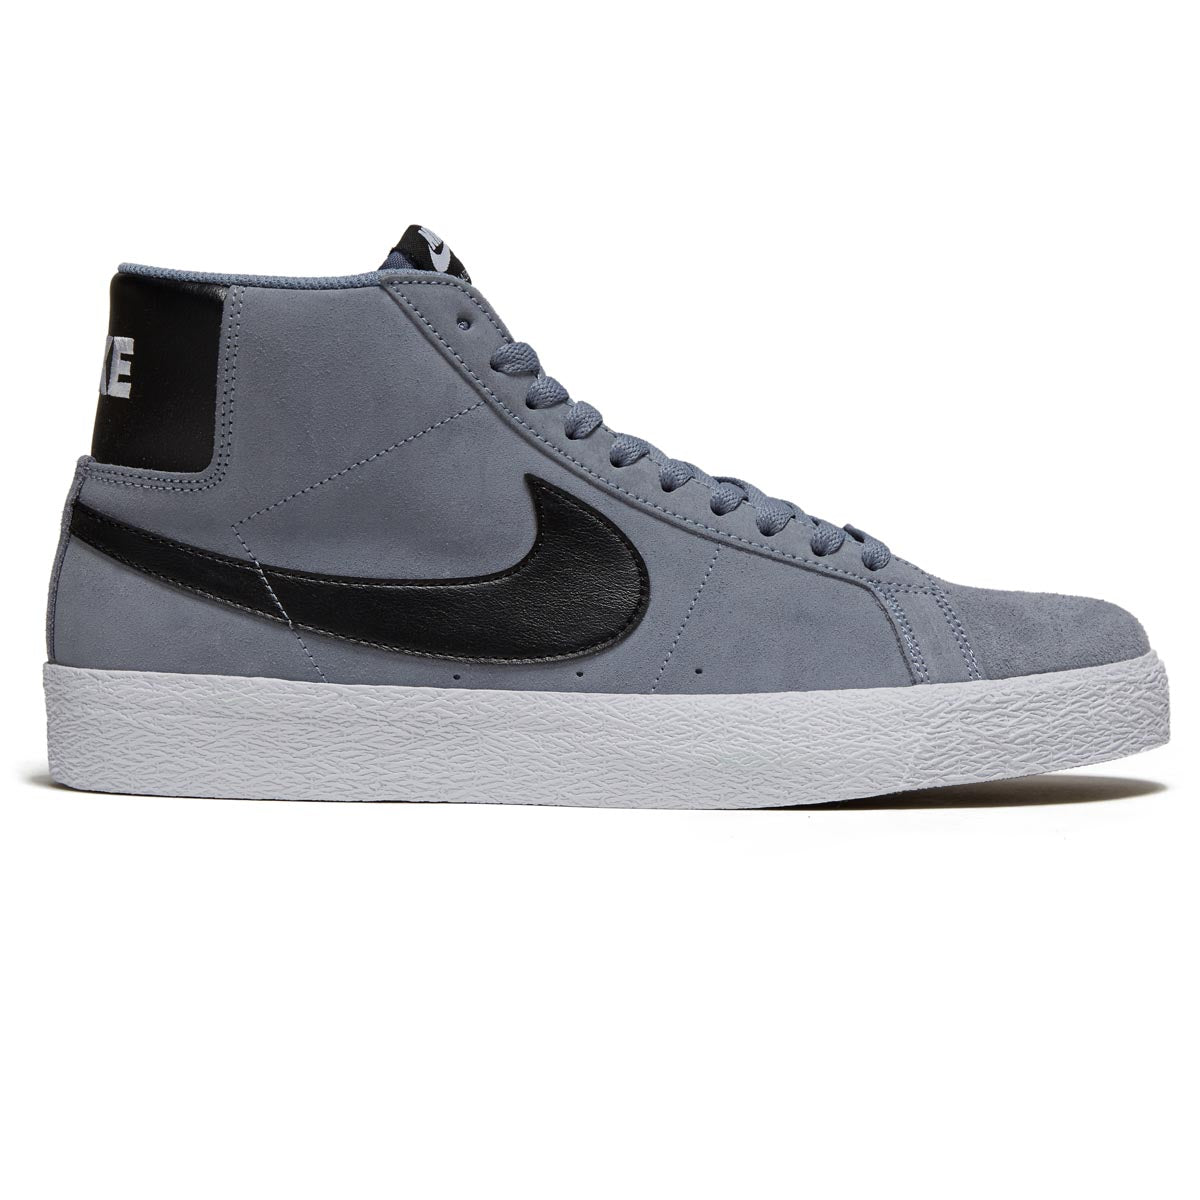 Nike SB Zoom Blazer Mid Shoes - Ashen Slate/Black/White/Ashen Slate image 1